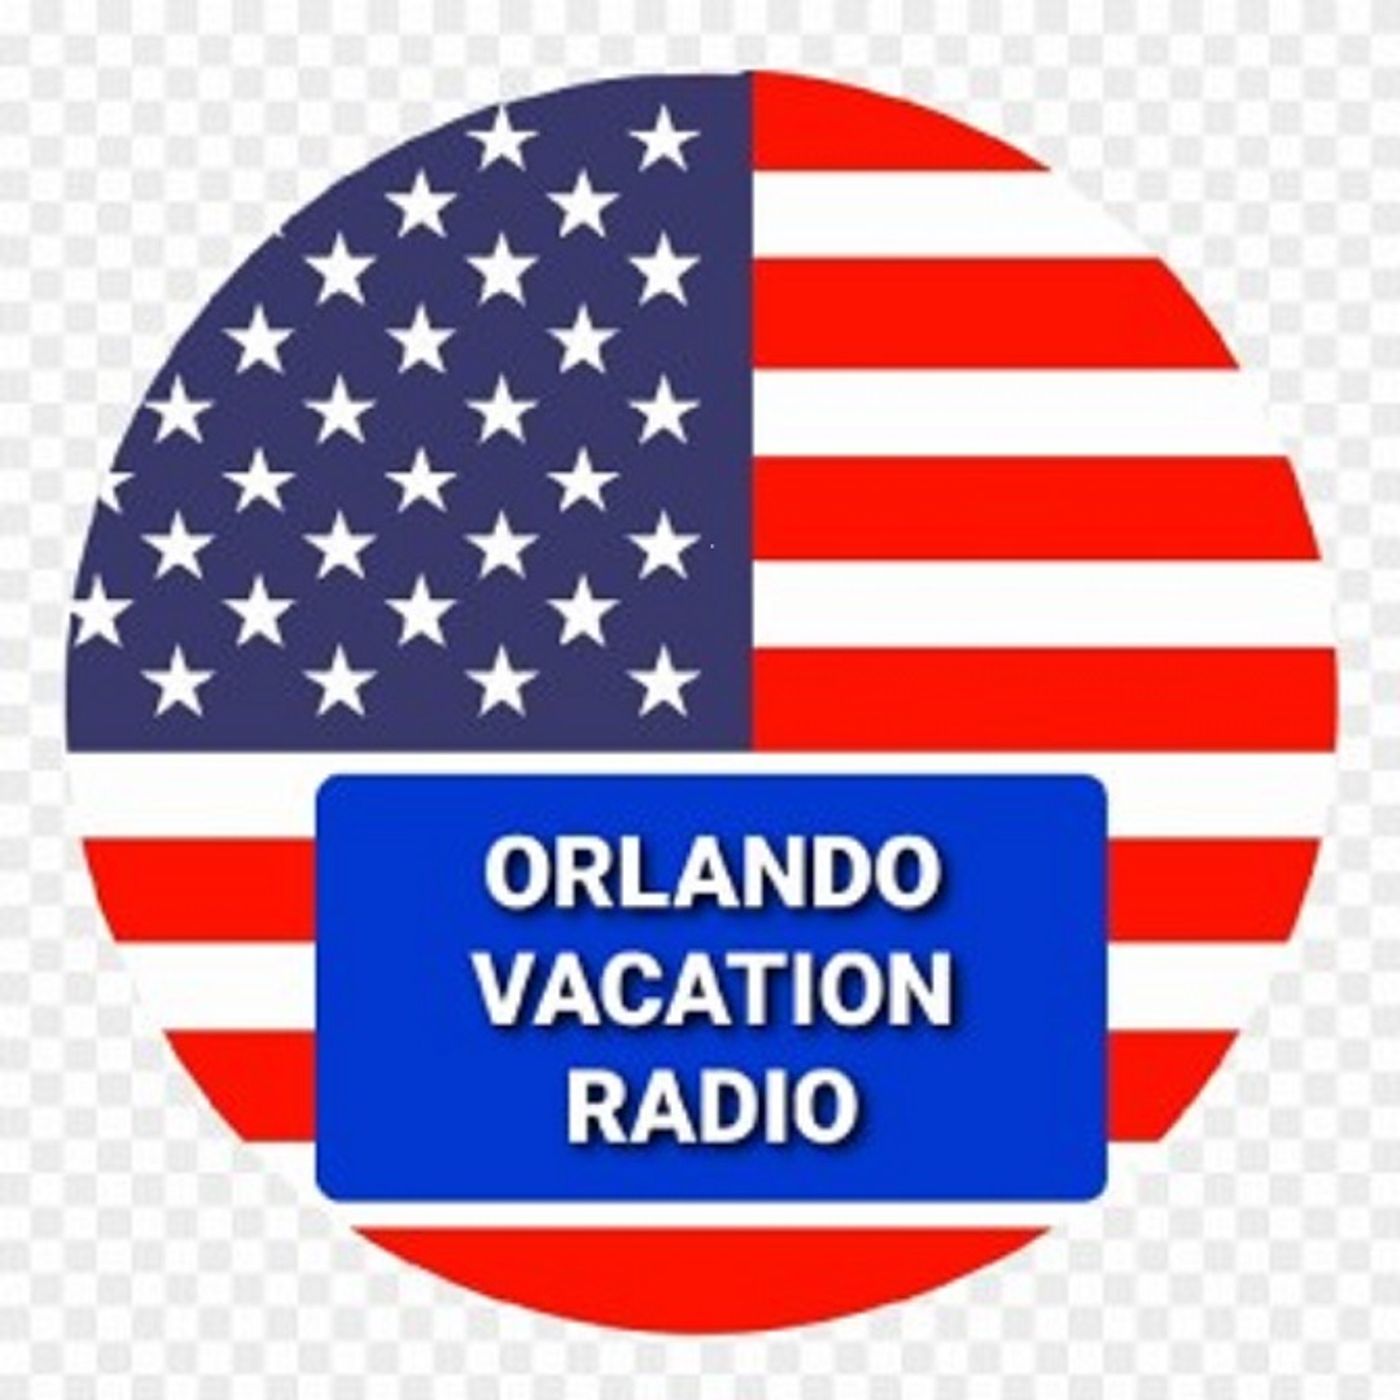 ORLANDO VACATION RADIO